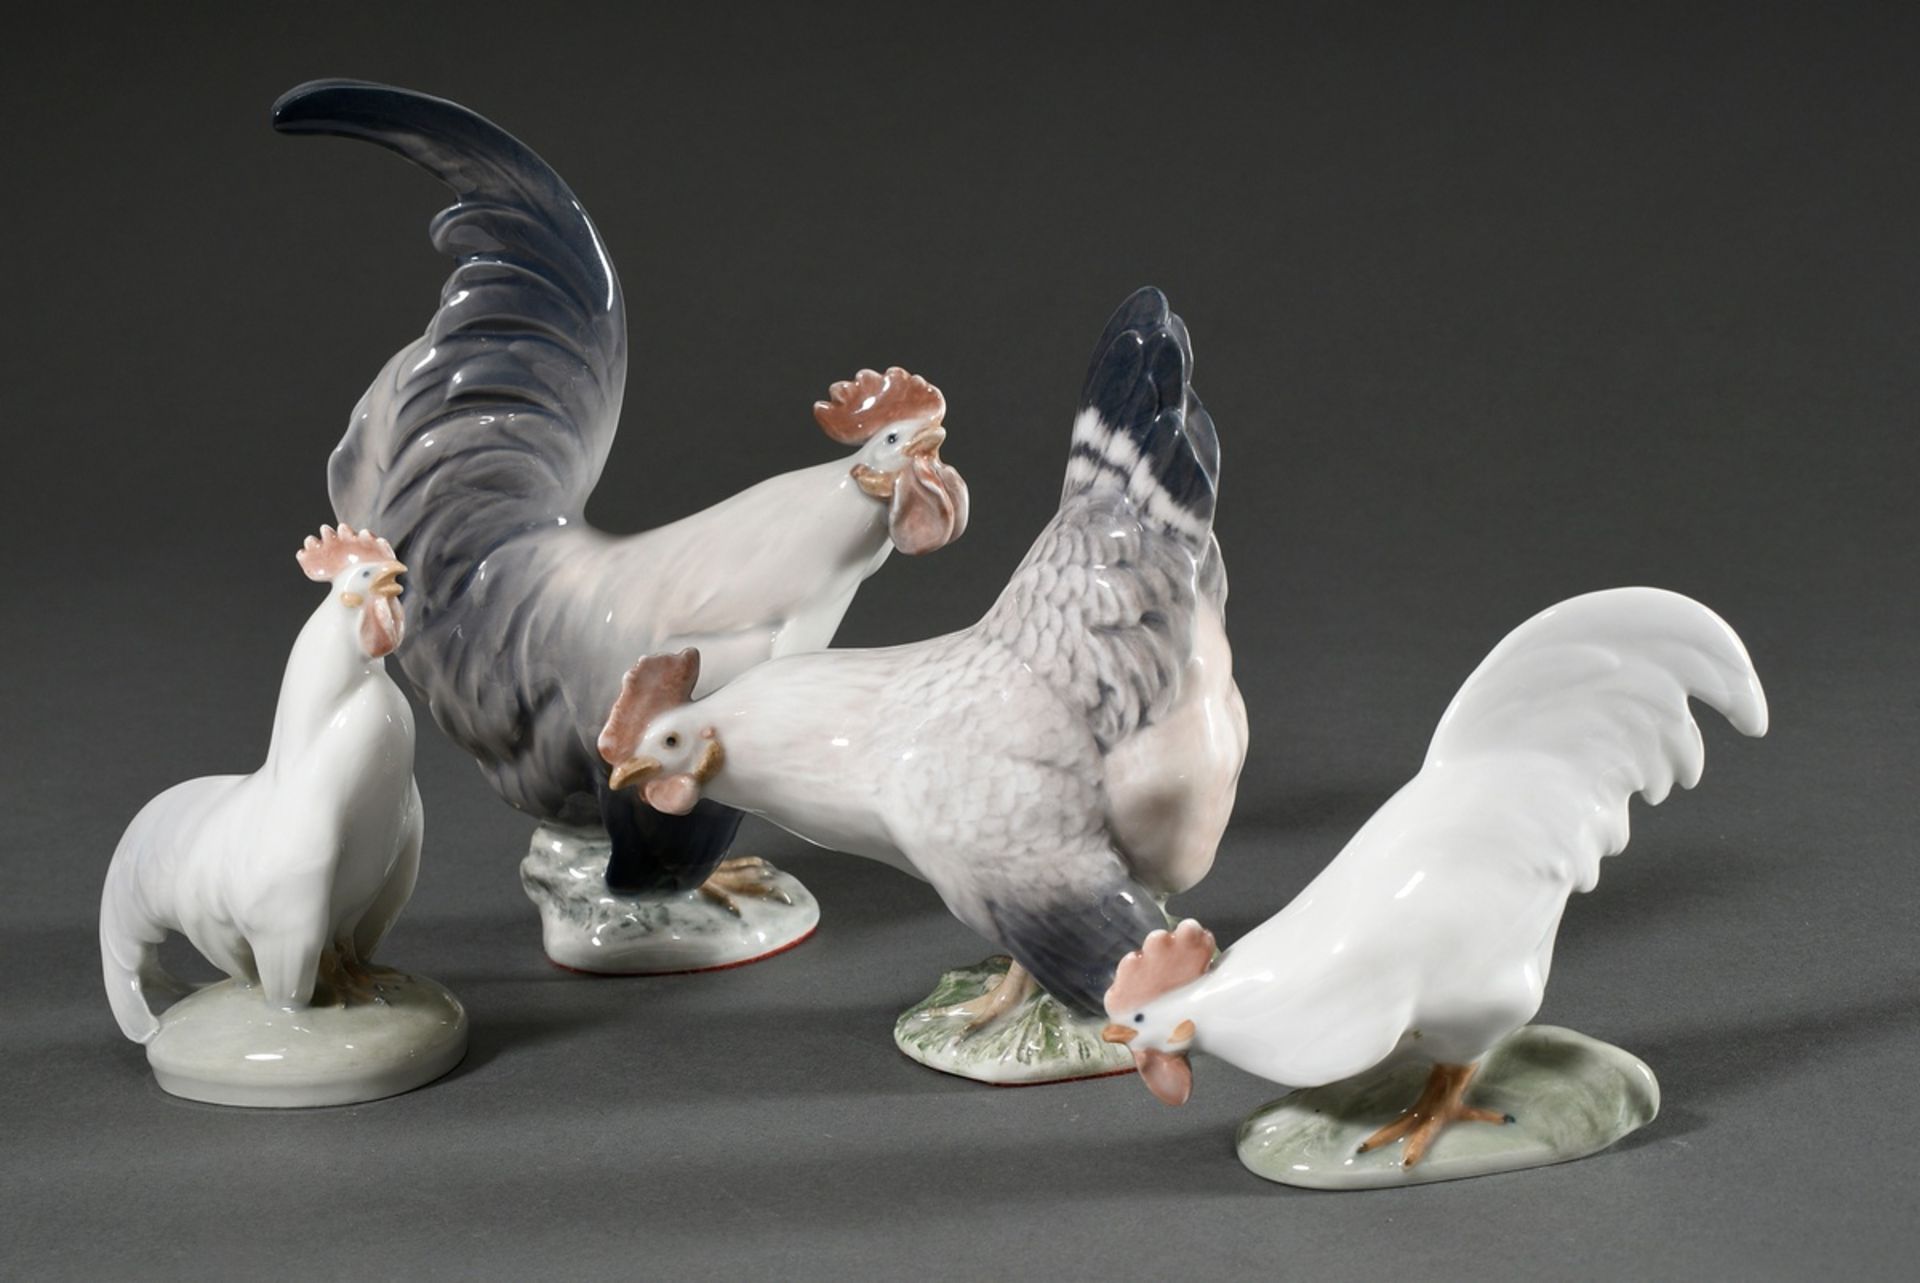 4 Various Royal Copenhagen figurines "Chickens" with polychrome underglaze painting, model no. 1024